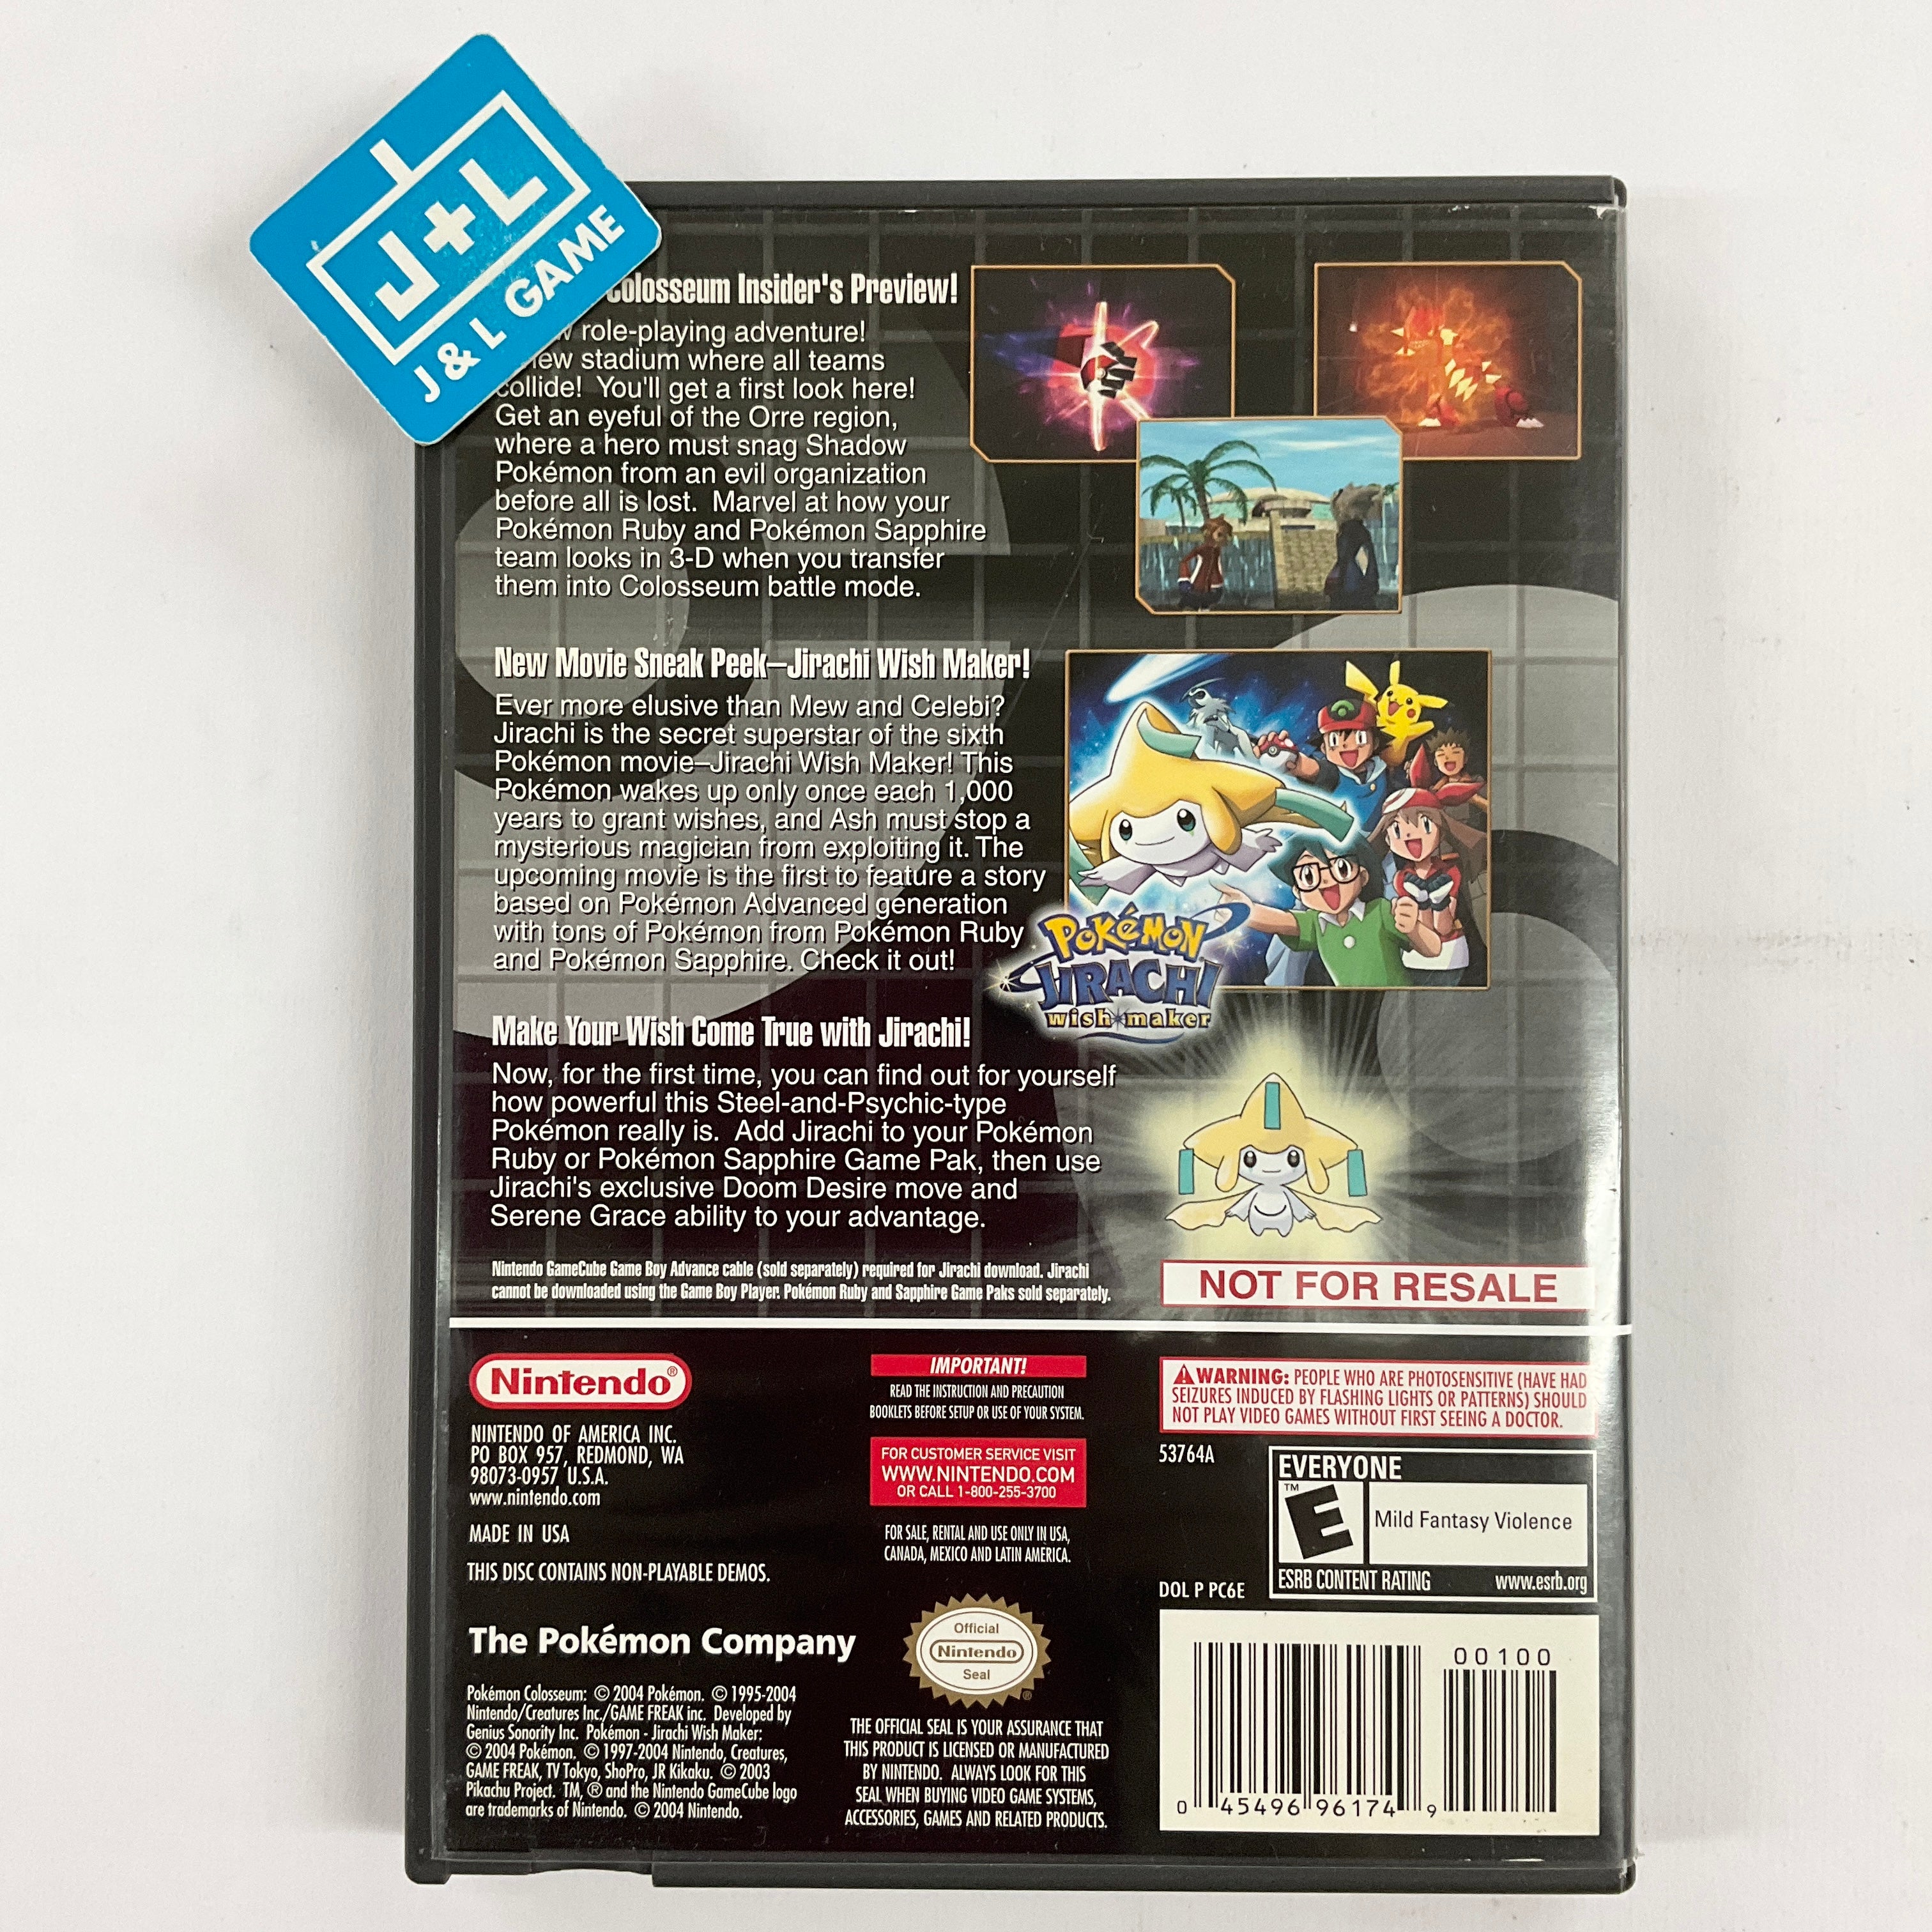 Pokemon Colosseum (Bonus Disc) - (GC) GameCube [Pre-Owned] Video Games Nintendo   